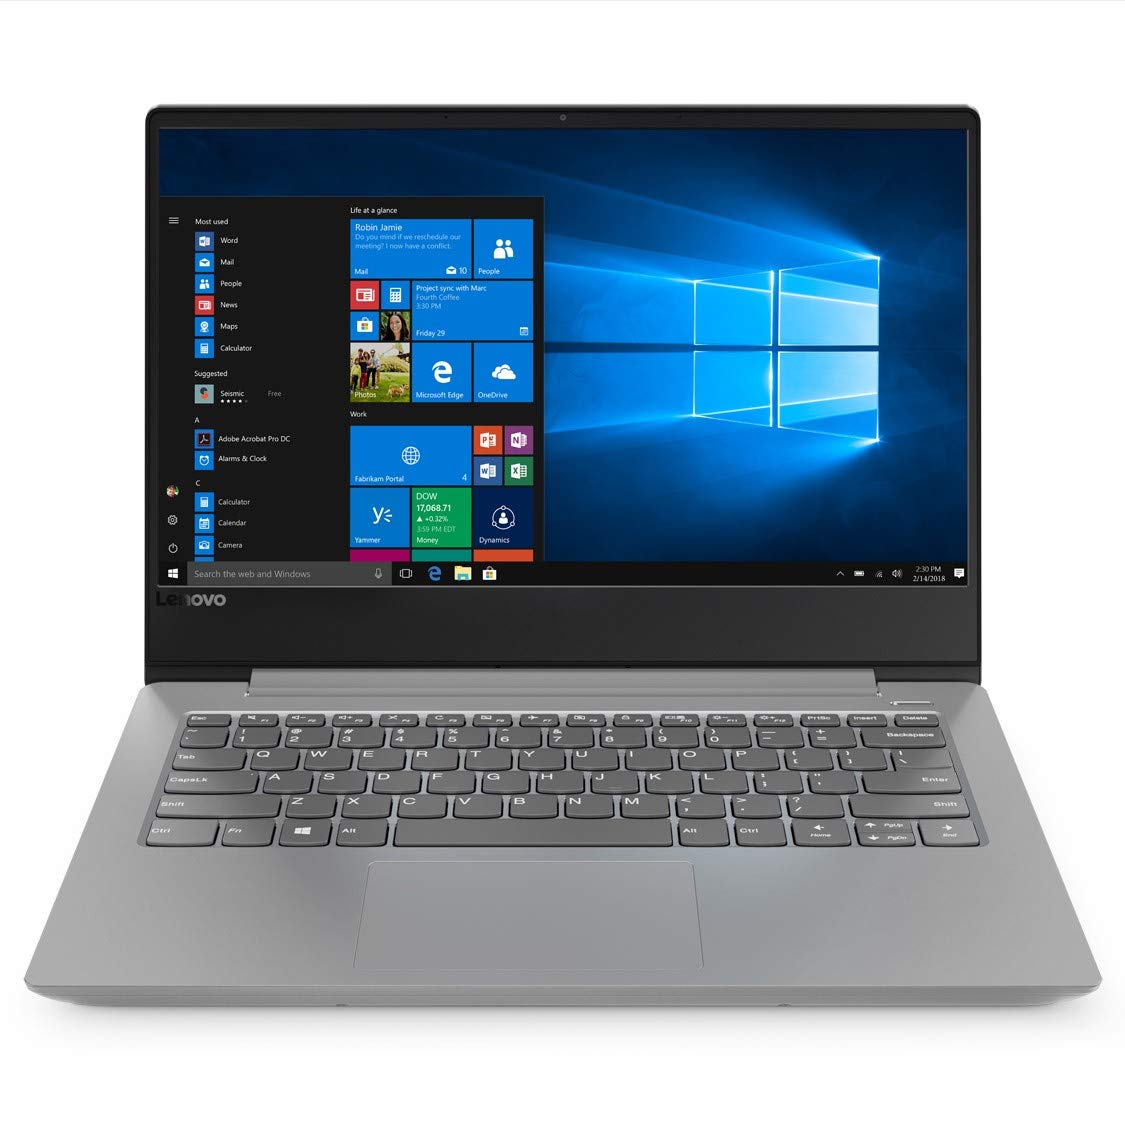 Lenovo Ideapad 330S 81F40165IN 14-inch Laptop (8th Gen Core i3-8130U/4GB/256GB/Windows 10/Integrated Graphics), Platinum Gray